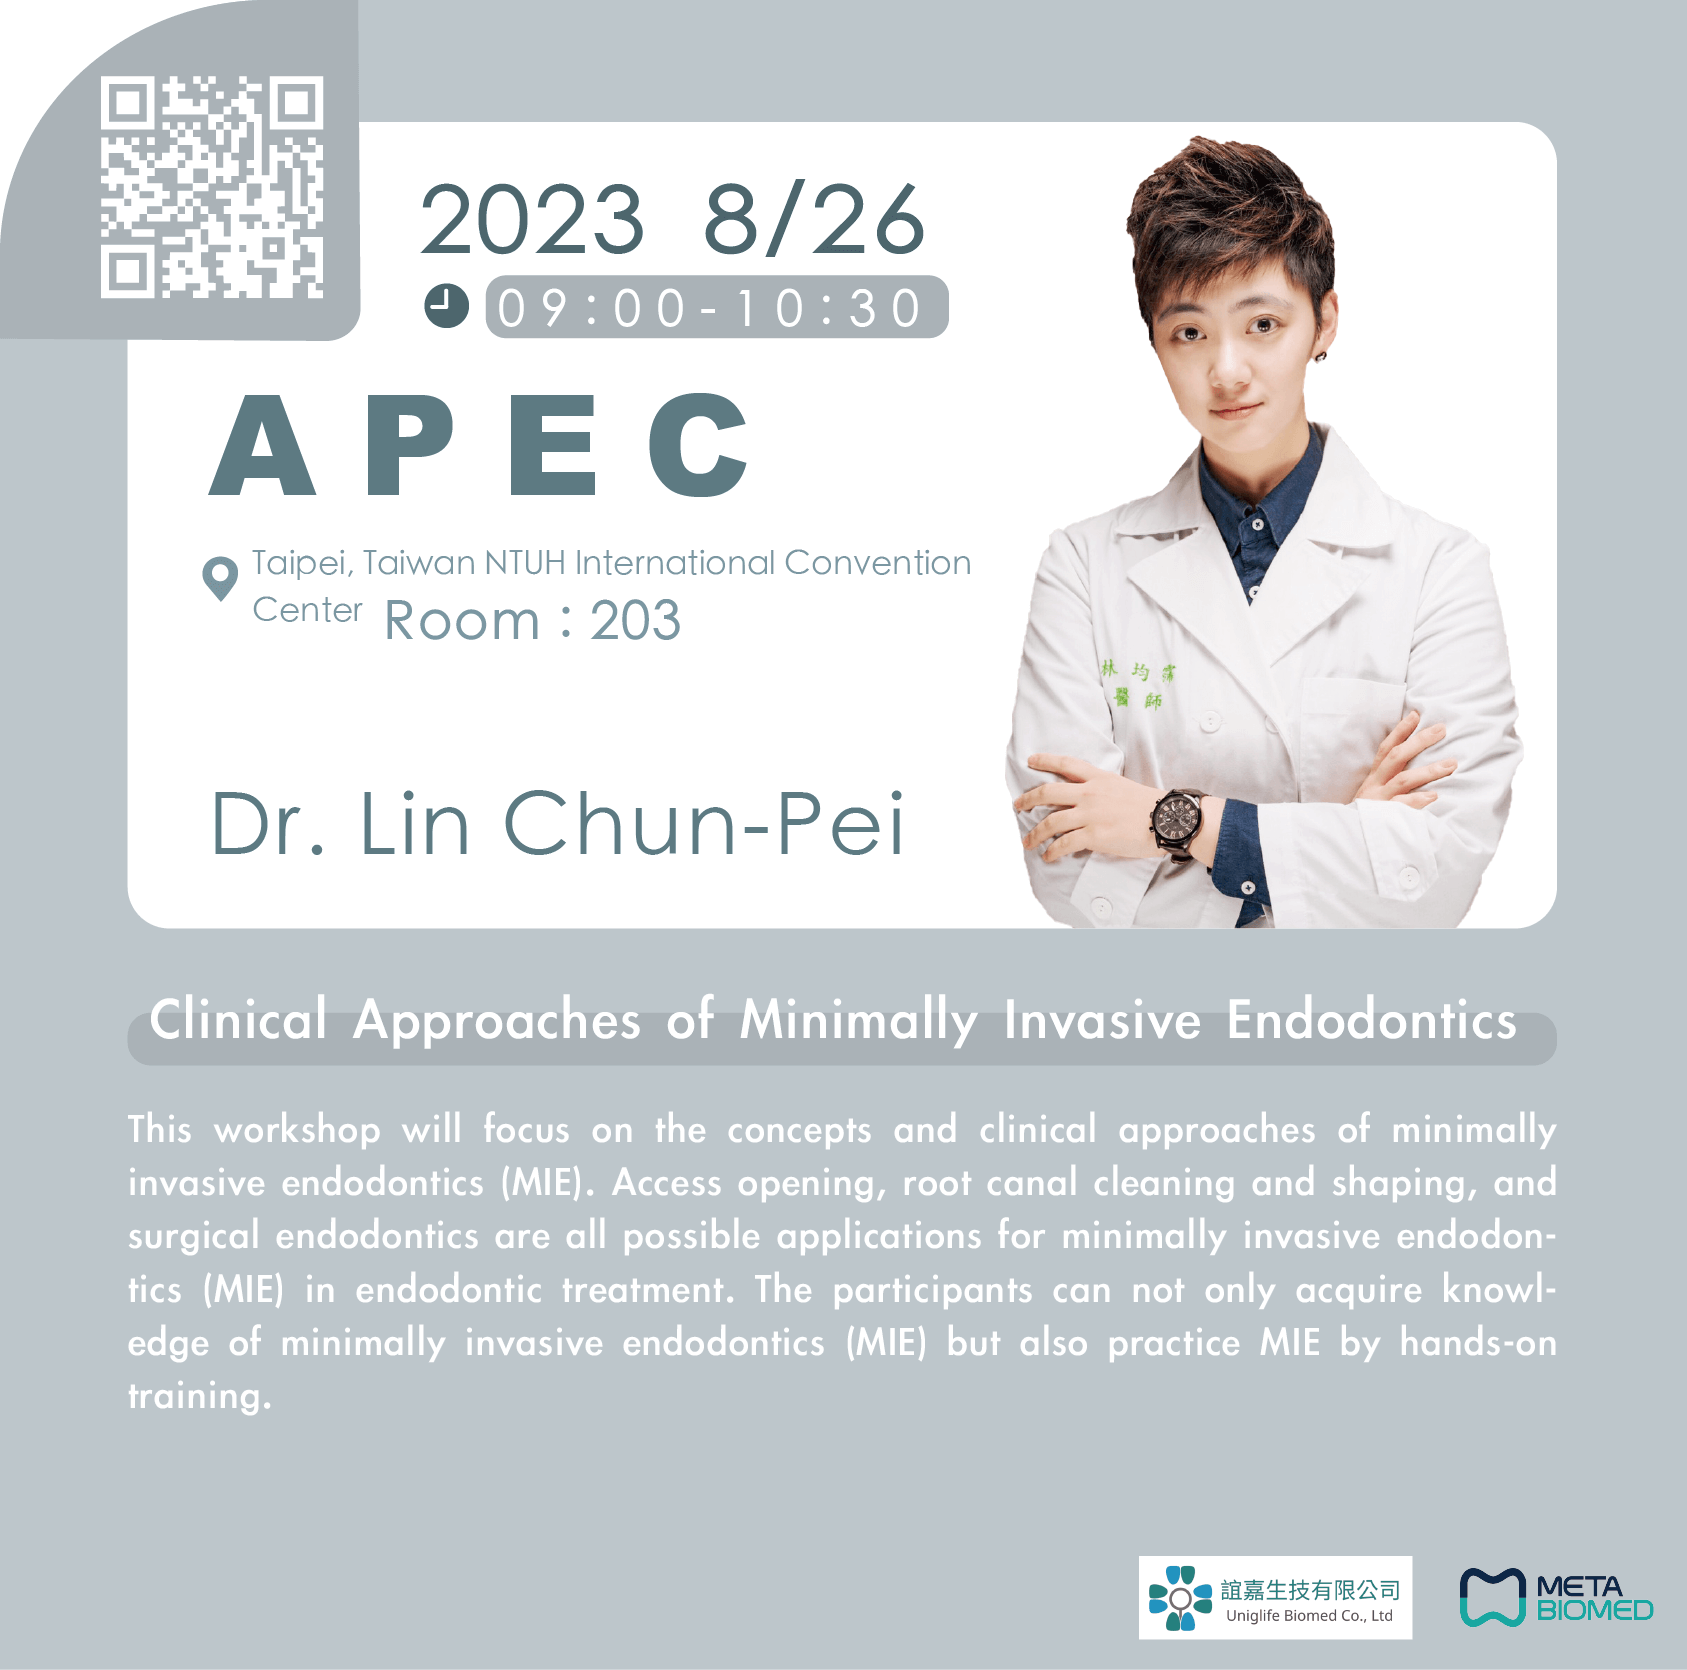 [APEC] Clinical Approaches of Minimally Invasive Endodontics - Dr. Lin Chun-Pei